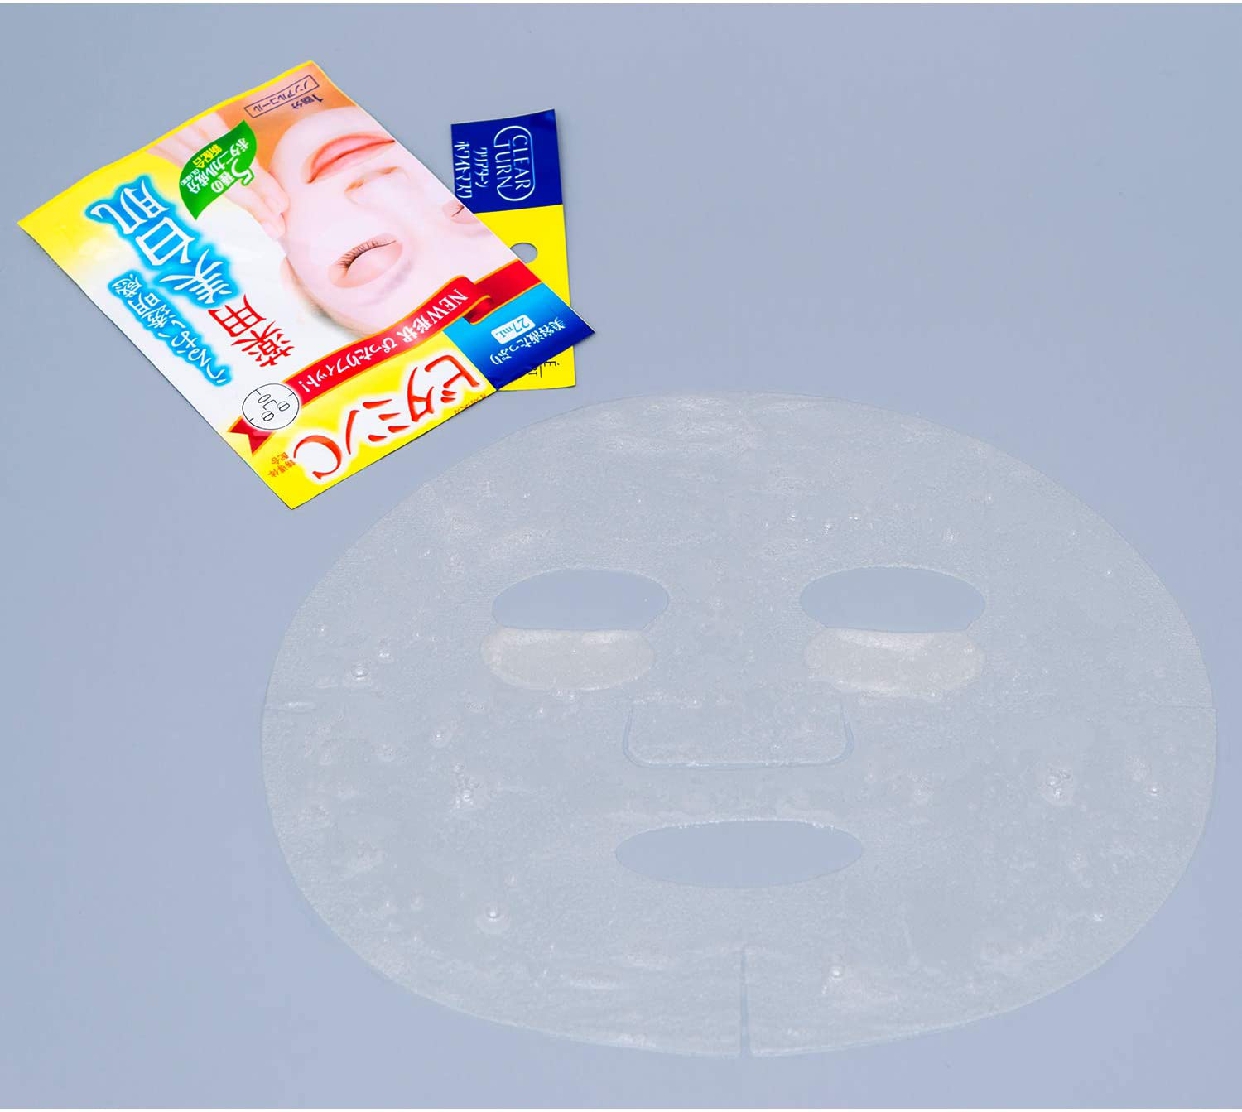 CLEAR TURN(クリアターン) ホワイト マスク (ビタミンＣ)の商品画像6 